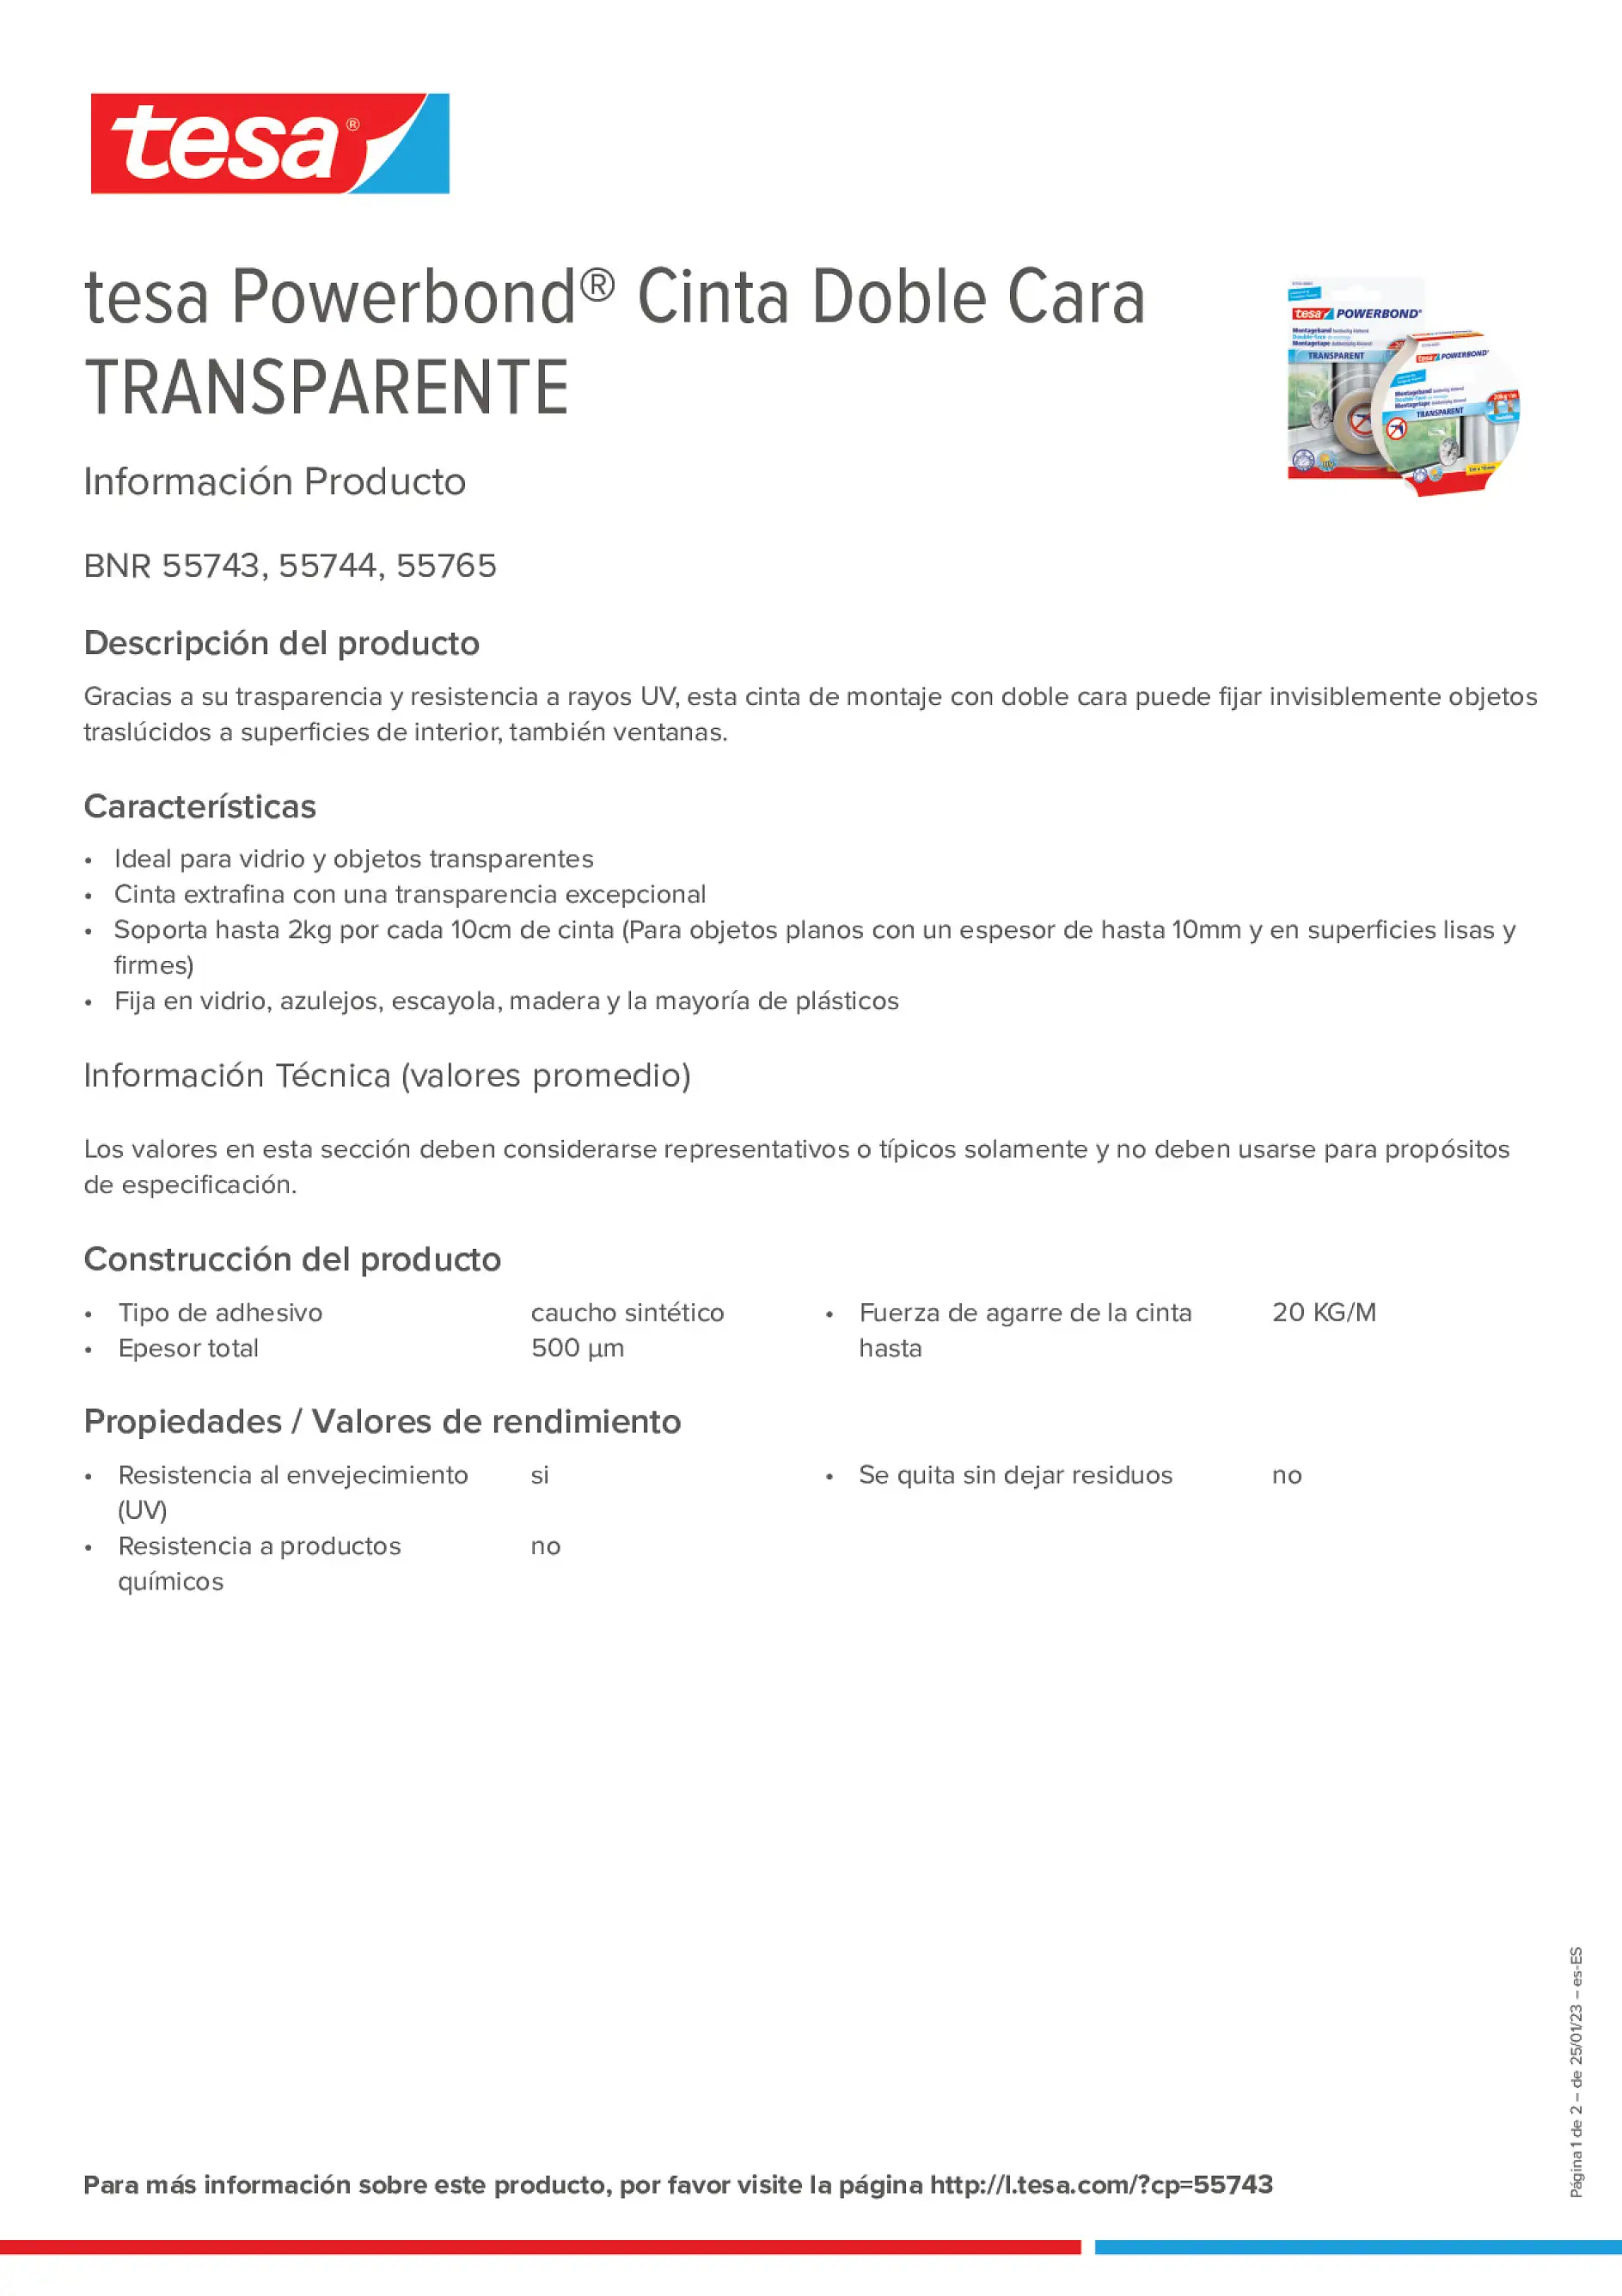 powerbond-transparent_copiw_es-ES